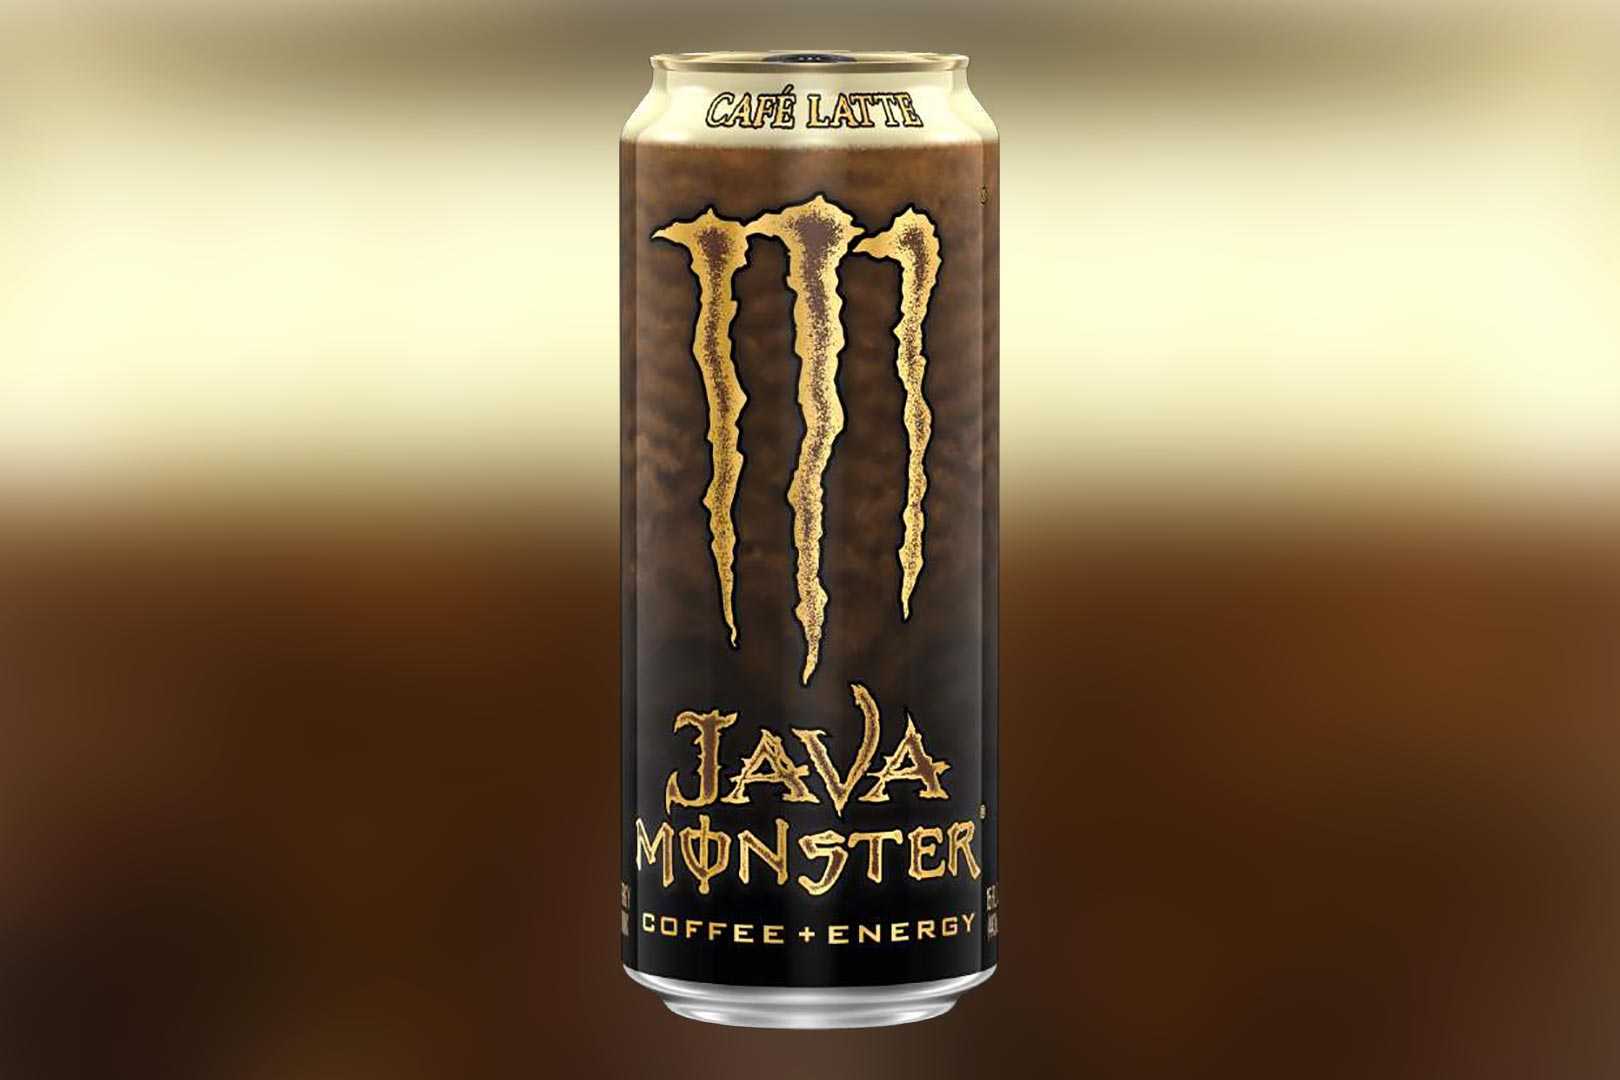 Cafe Latter Java Monster